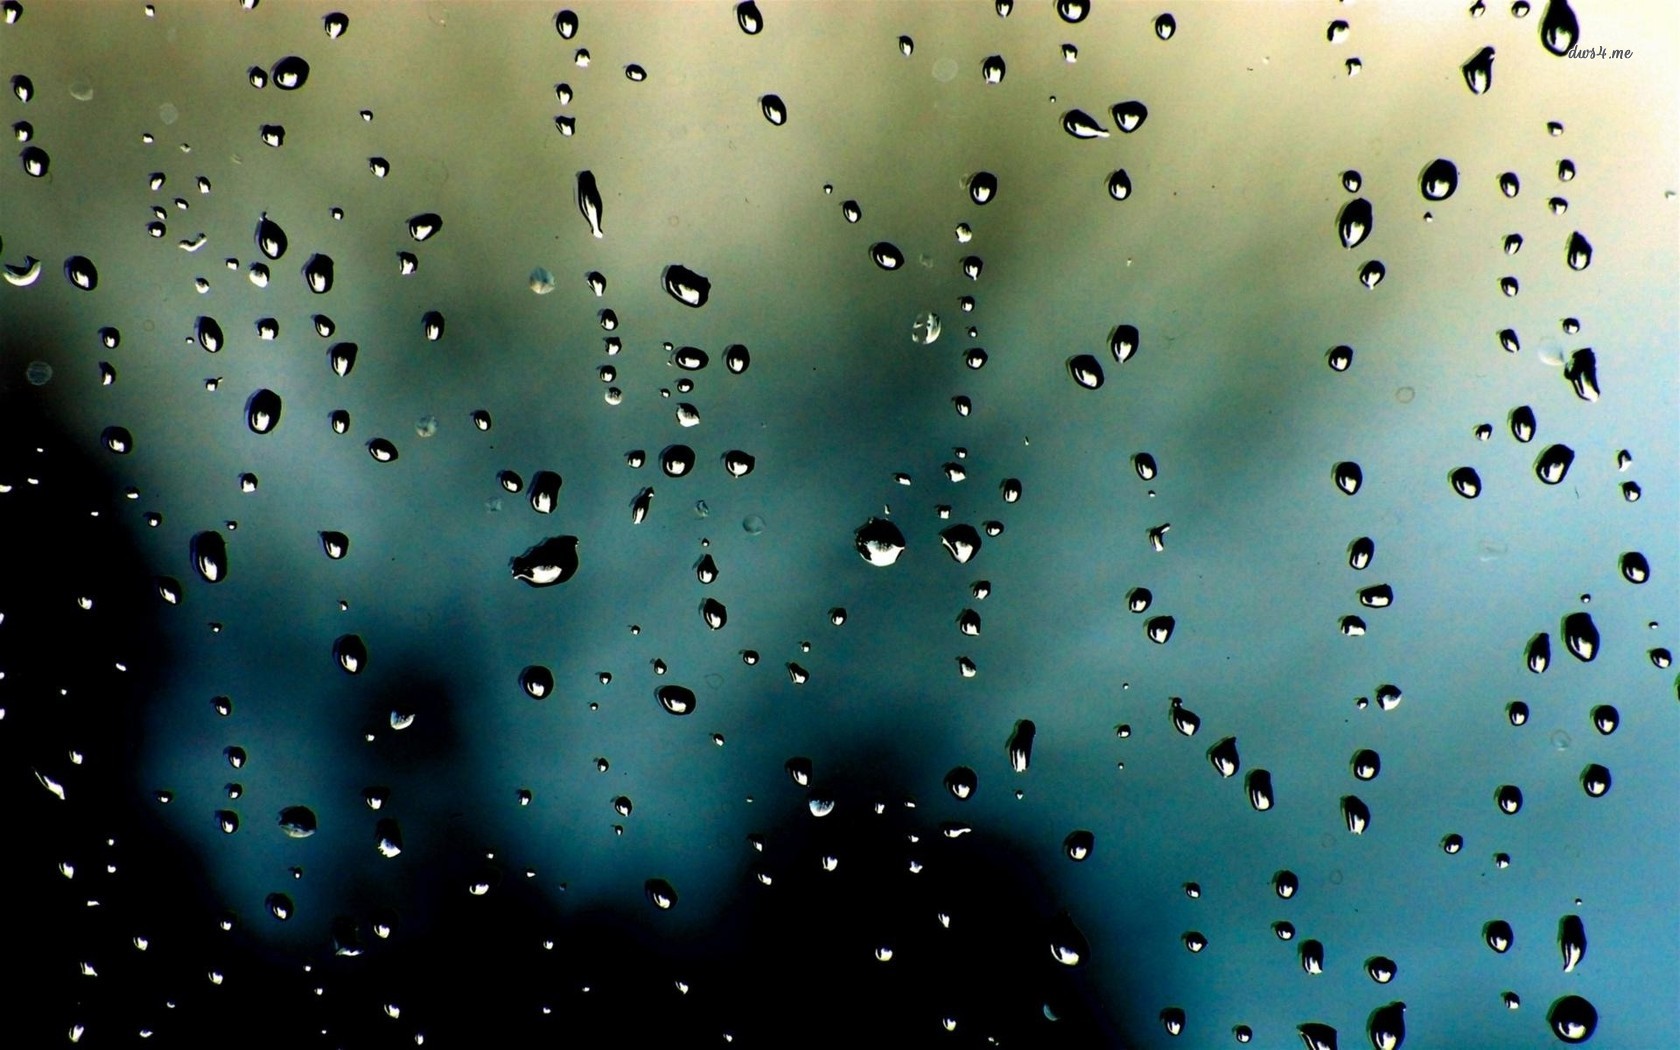 Rain Drops Wallpaper Widescreen HD 7953 - HD Wallpapers Site